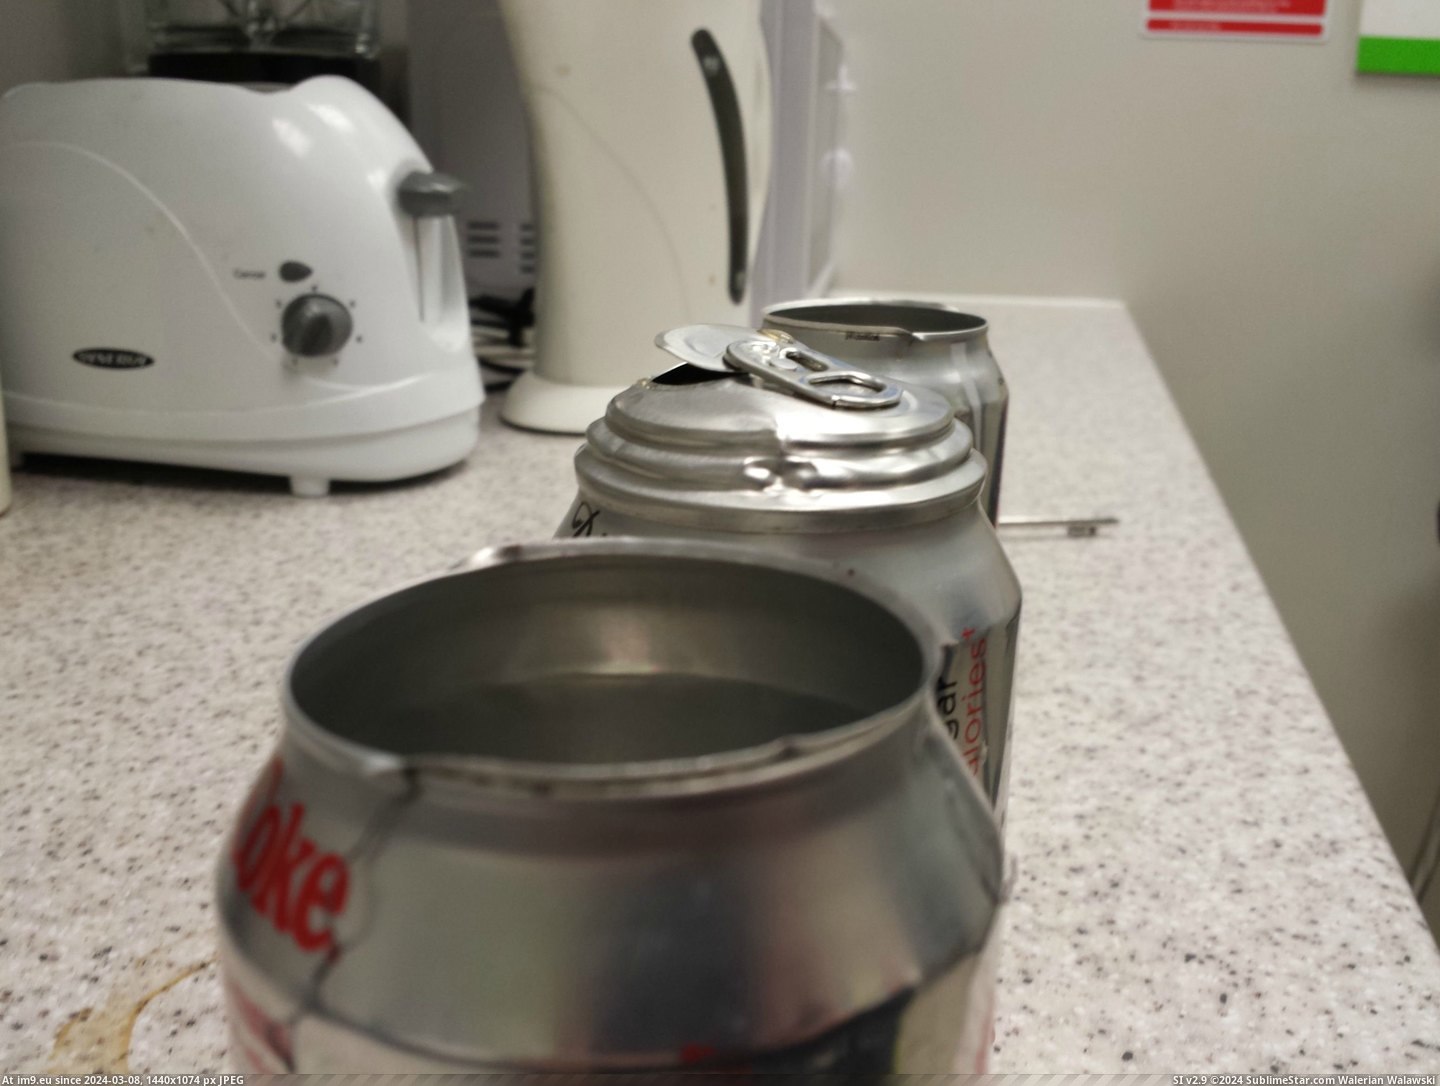 #Work #Way #Burst #Cans #Fridge [Mildlyinteresting] The cans in the fridge at work burst open in a way I've never seen 2 Pic. (Bild von album My r/MILDLYINTERESTING favs))